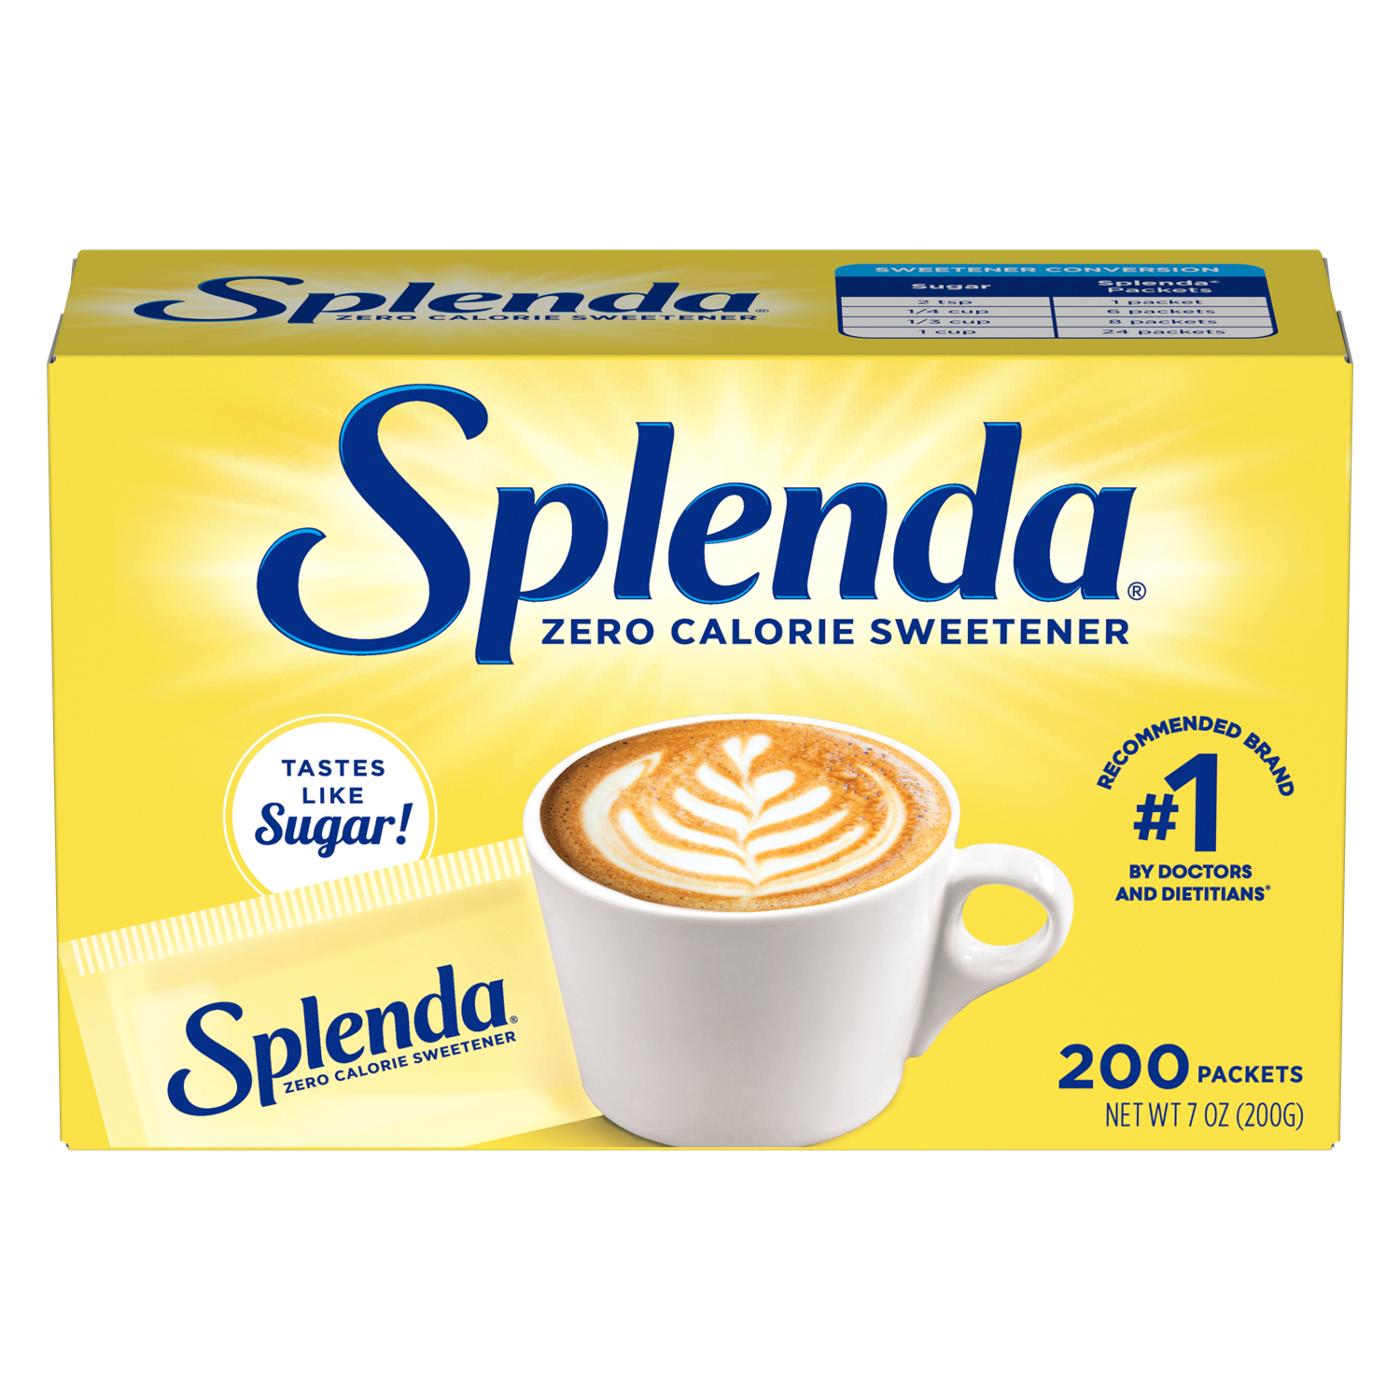 Splenda Zero Calorie Sweetener Packets; image 1 of 2